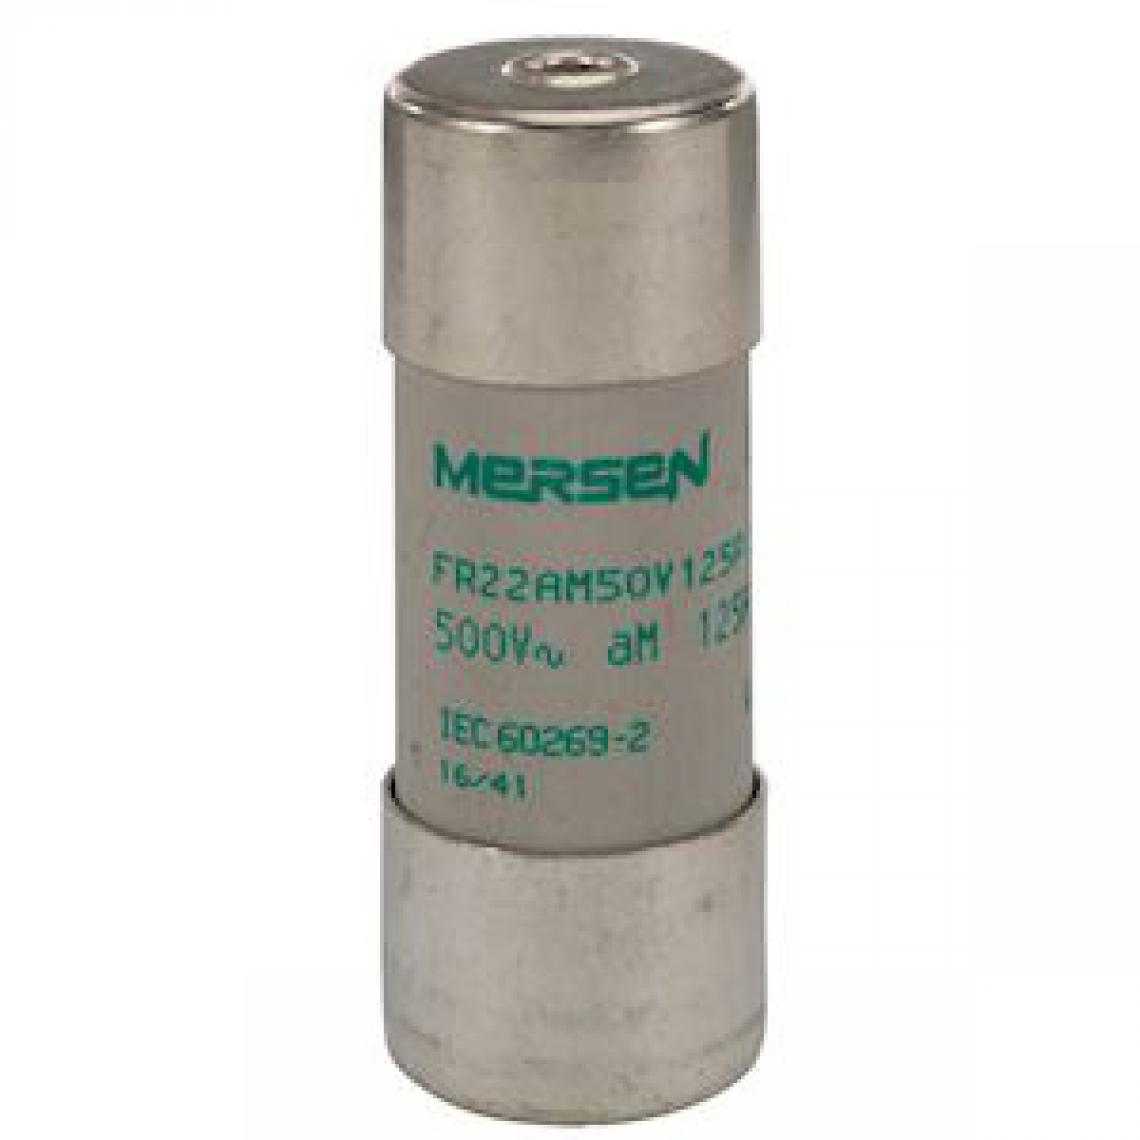 Mersen - fusible cartouche - 22 x 58 - gg - 20a - 690v - sans indicateur - mersen p211038 - Fusibles